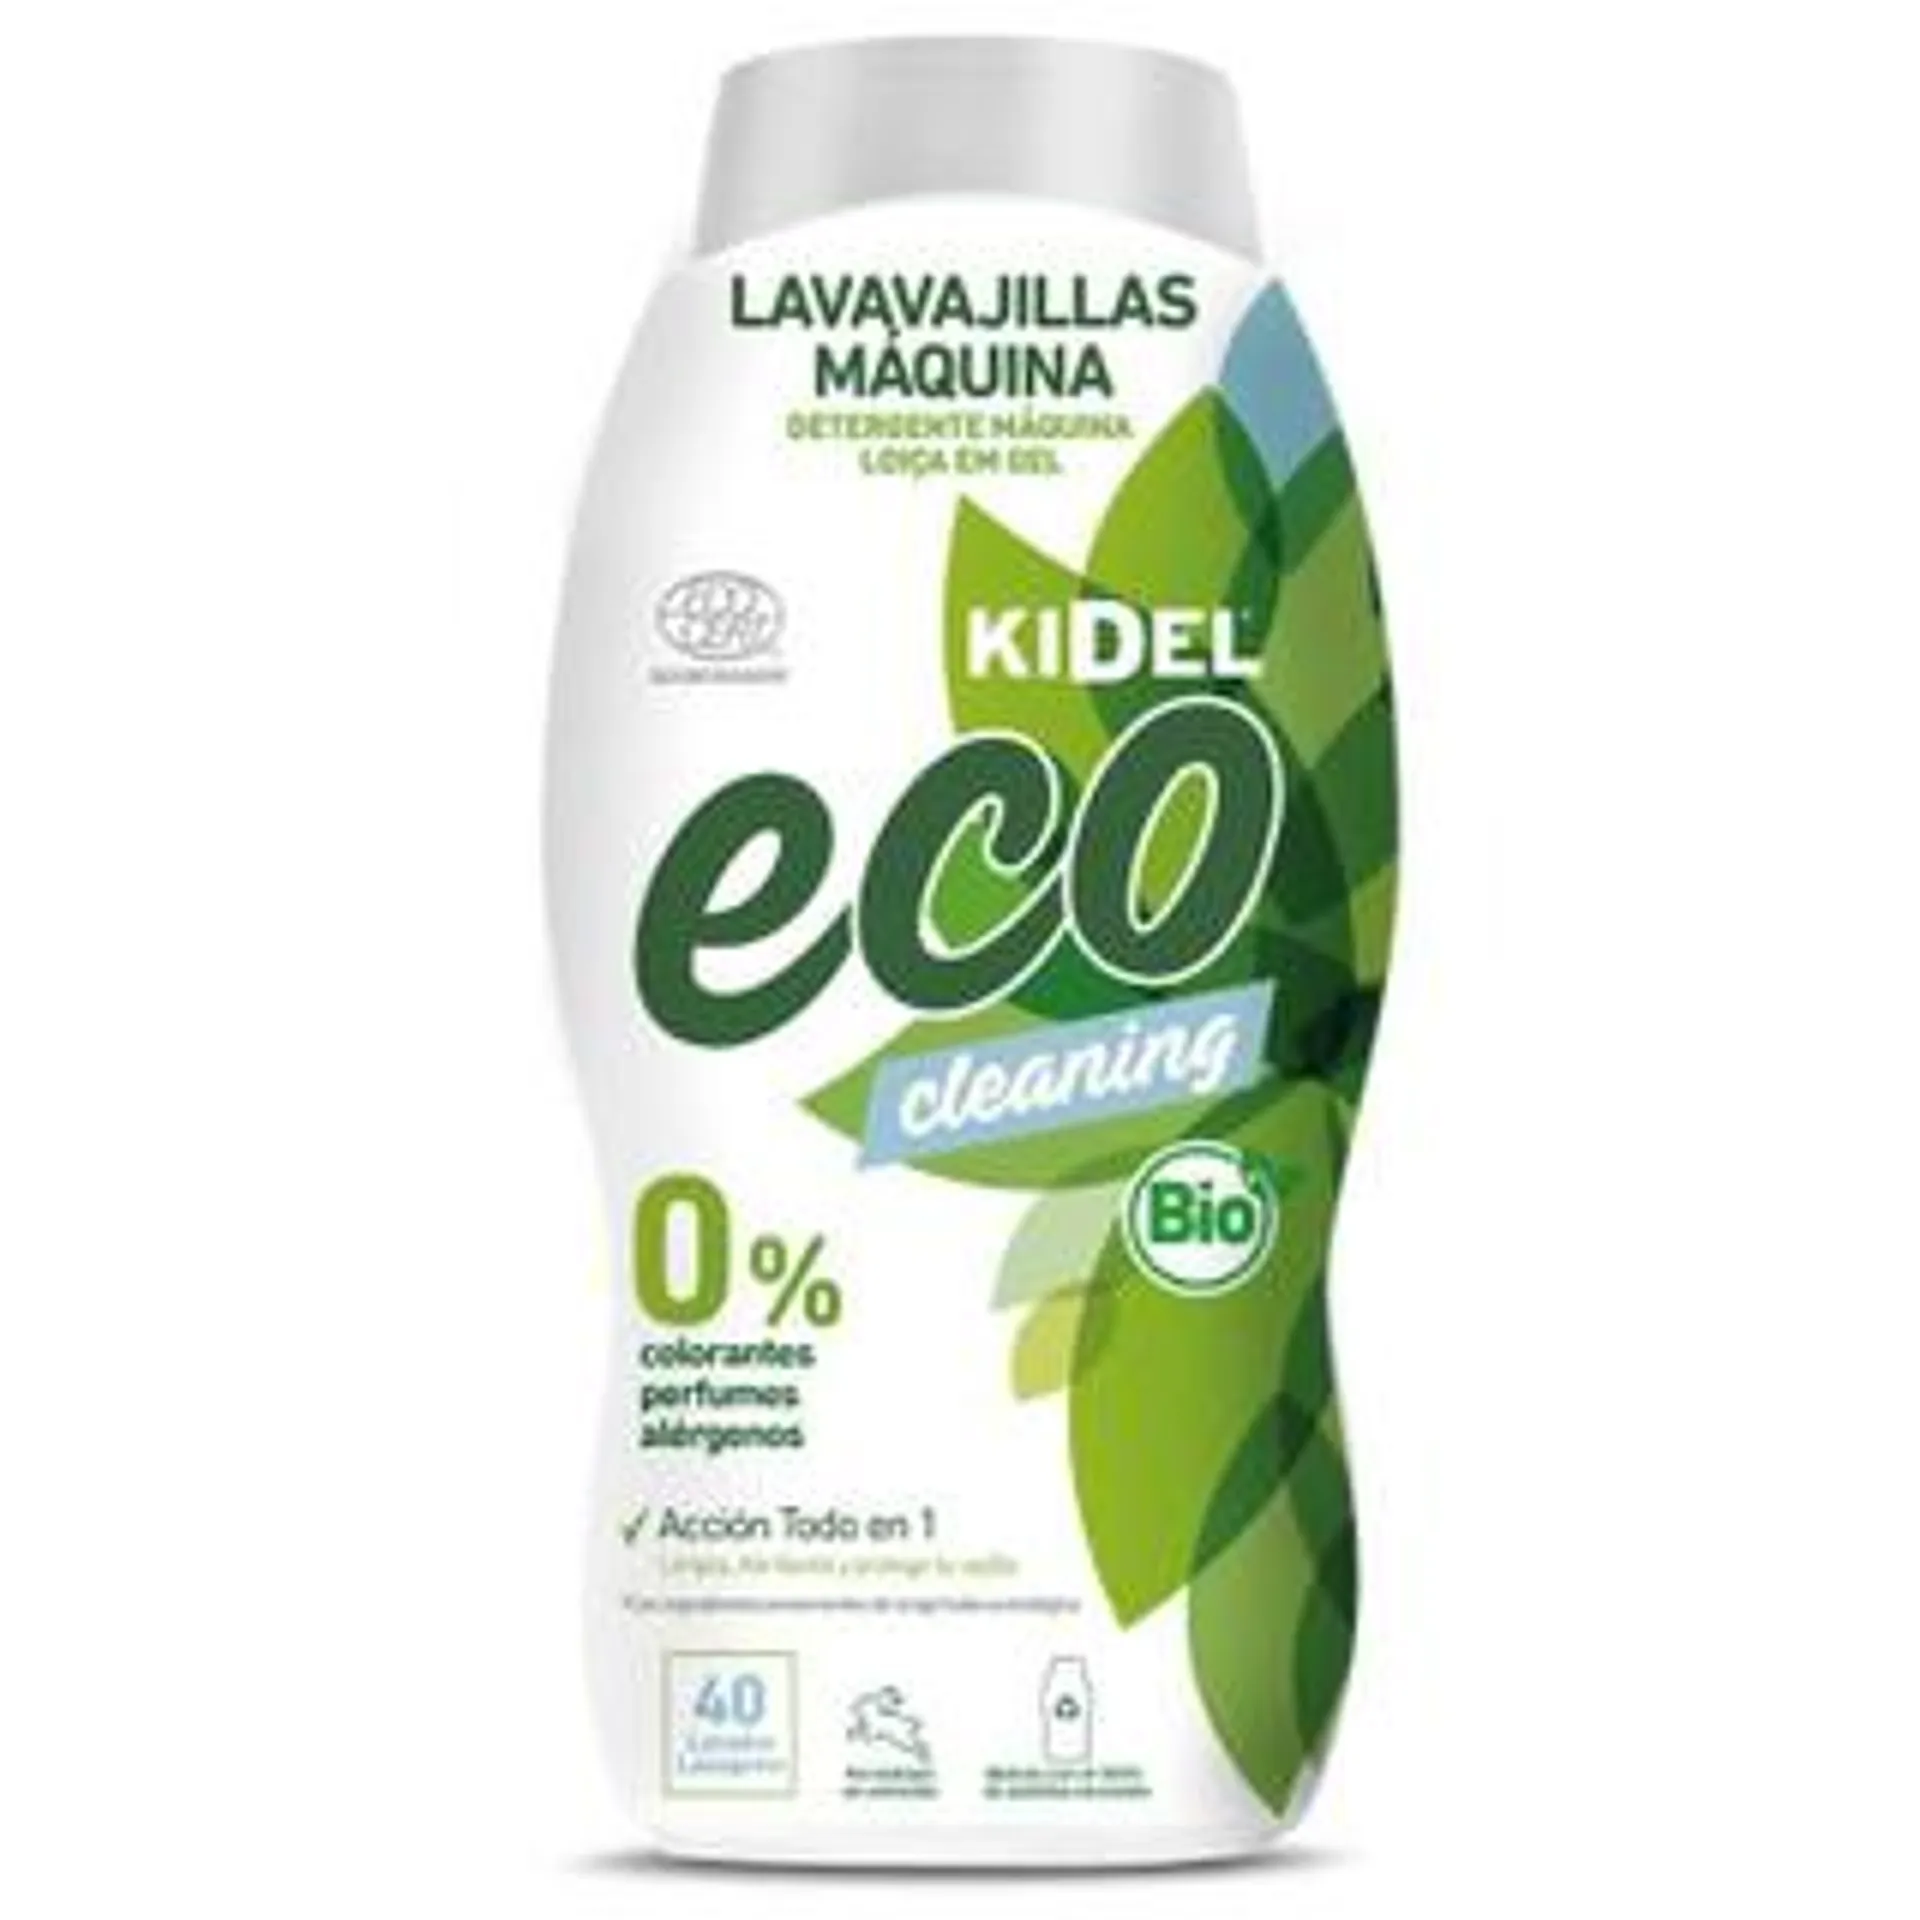 Kidel Lavavajillas Máquina Eco Mimidu 720 ml